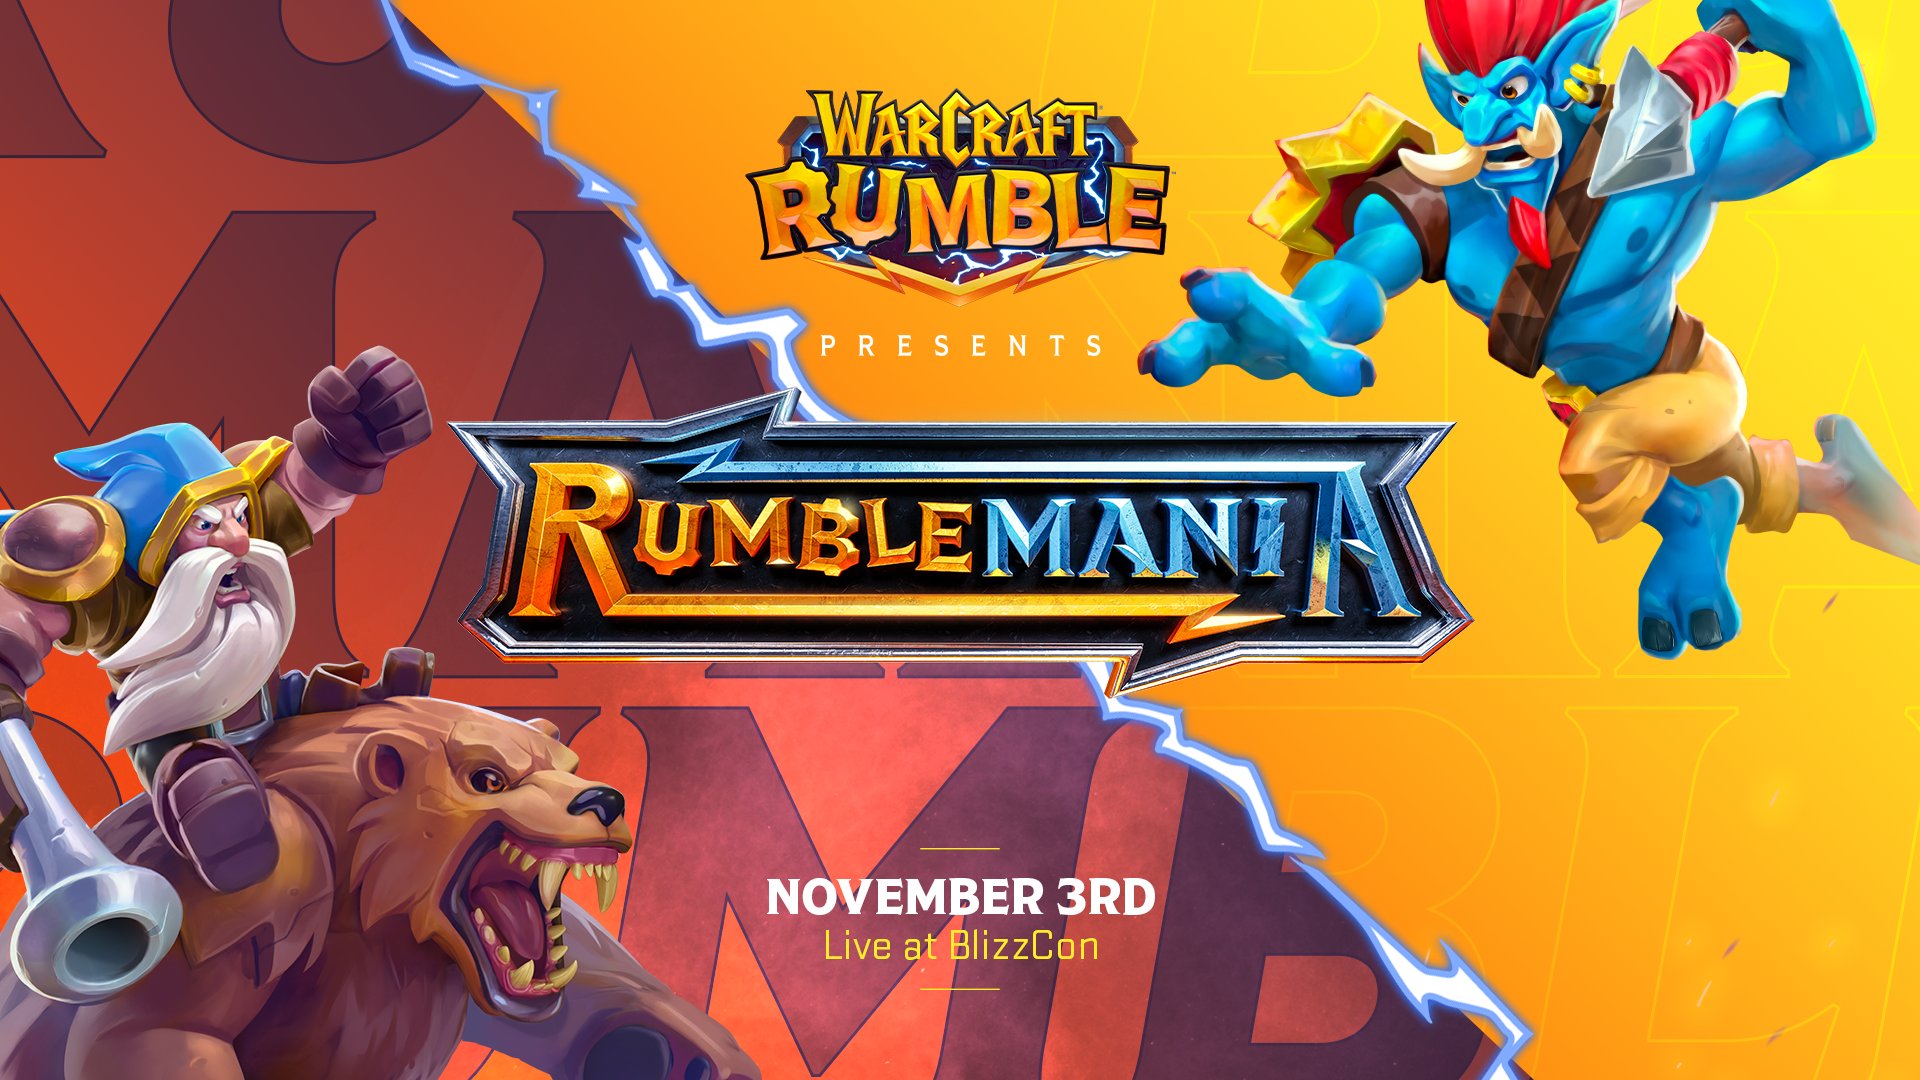 Crash Team Rumble announces season 1 content - Niche Gamer